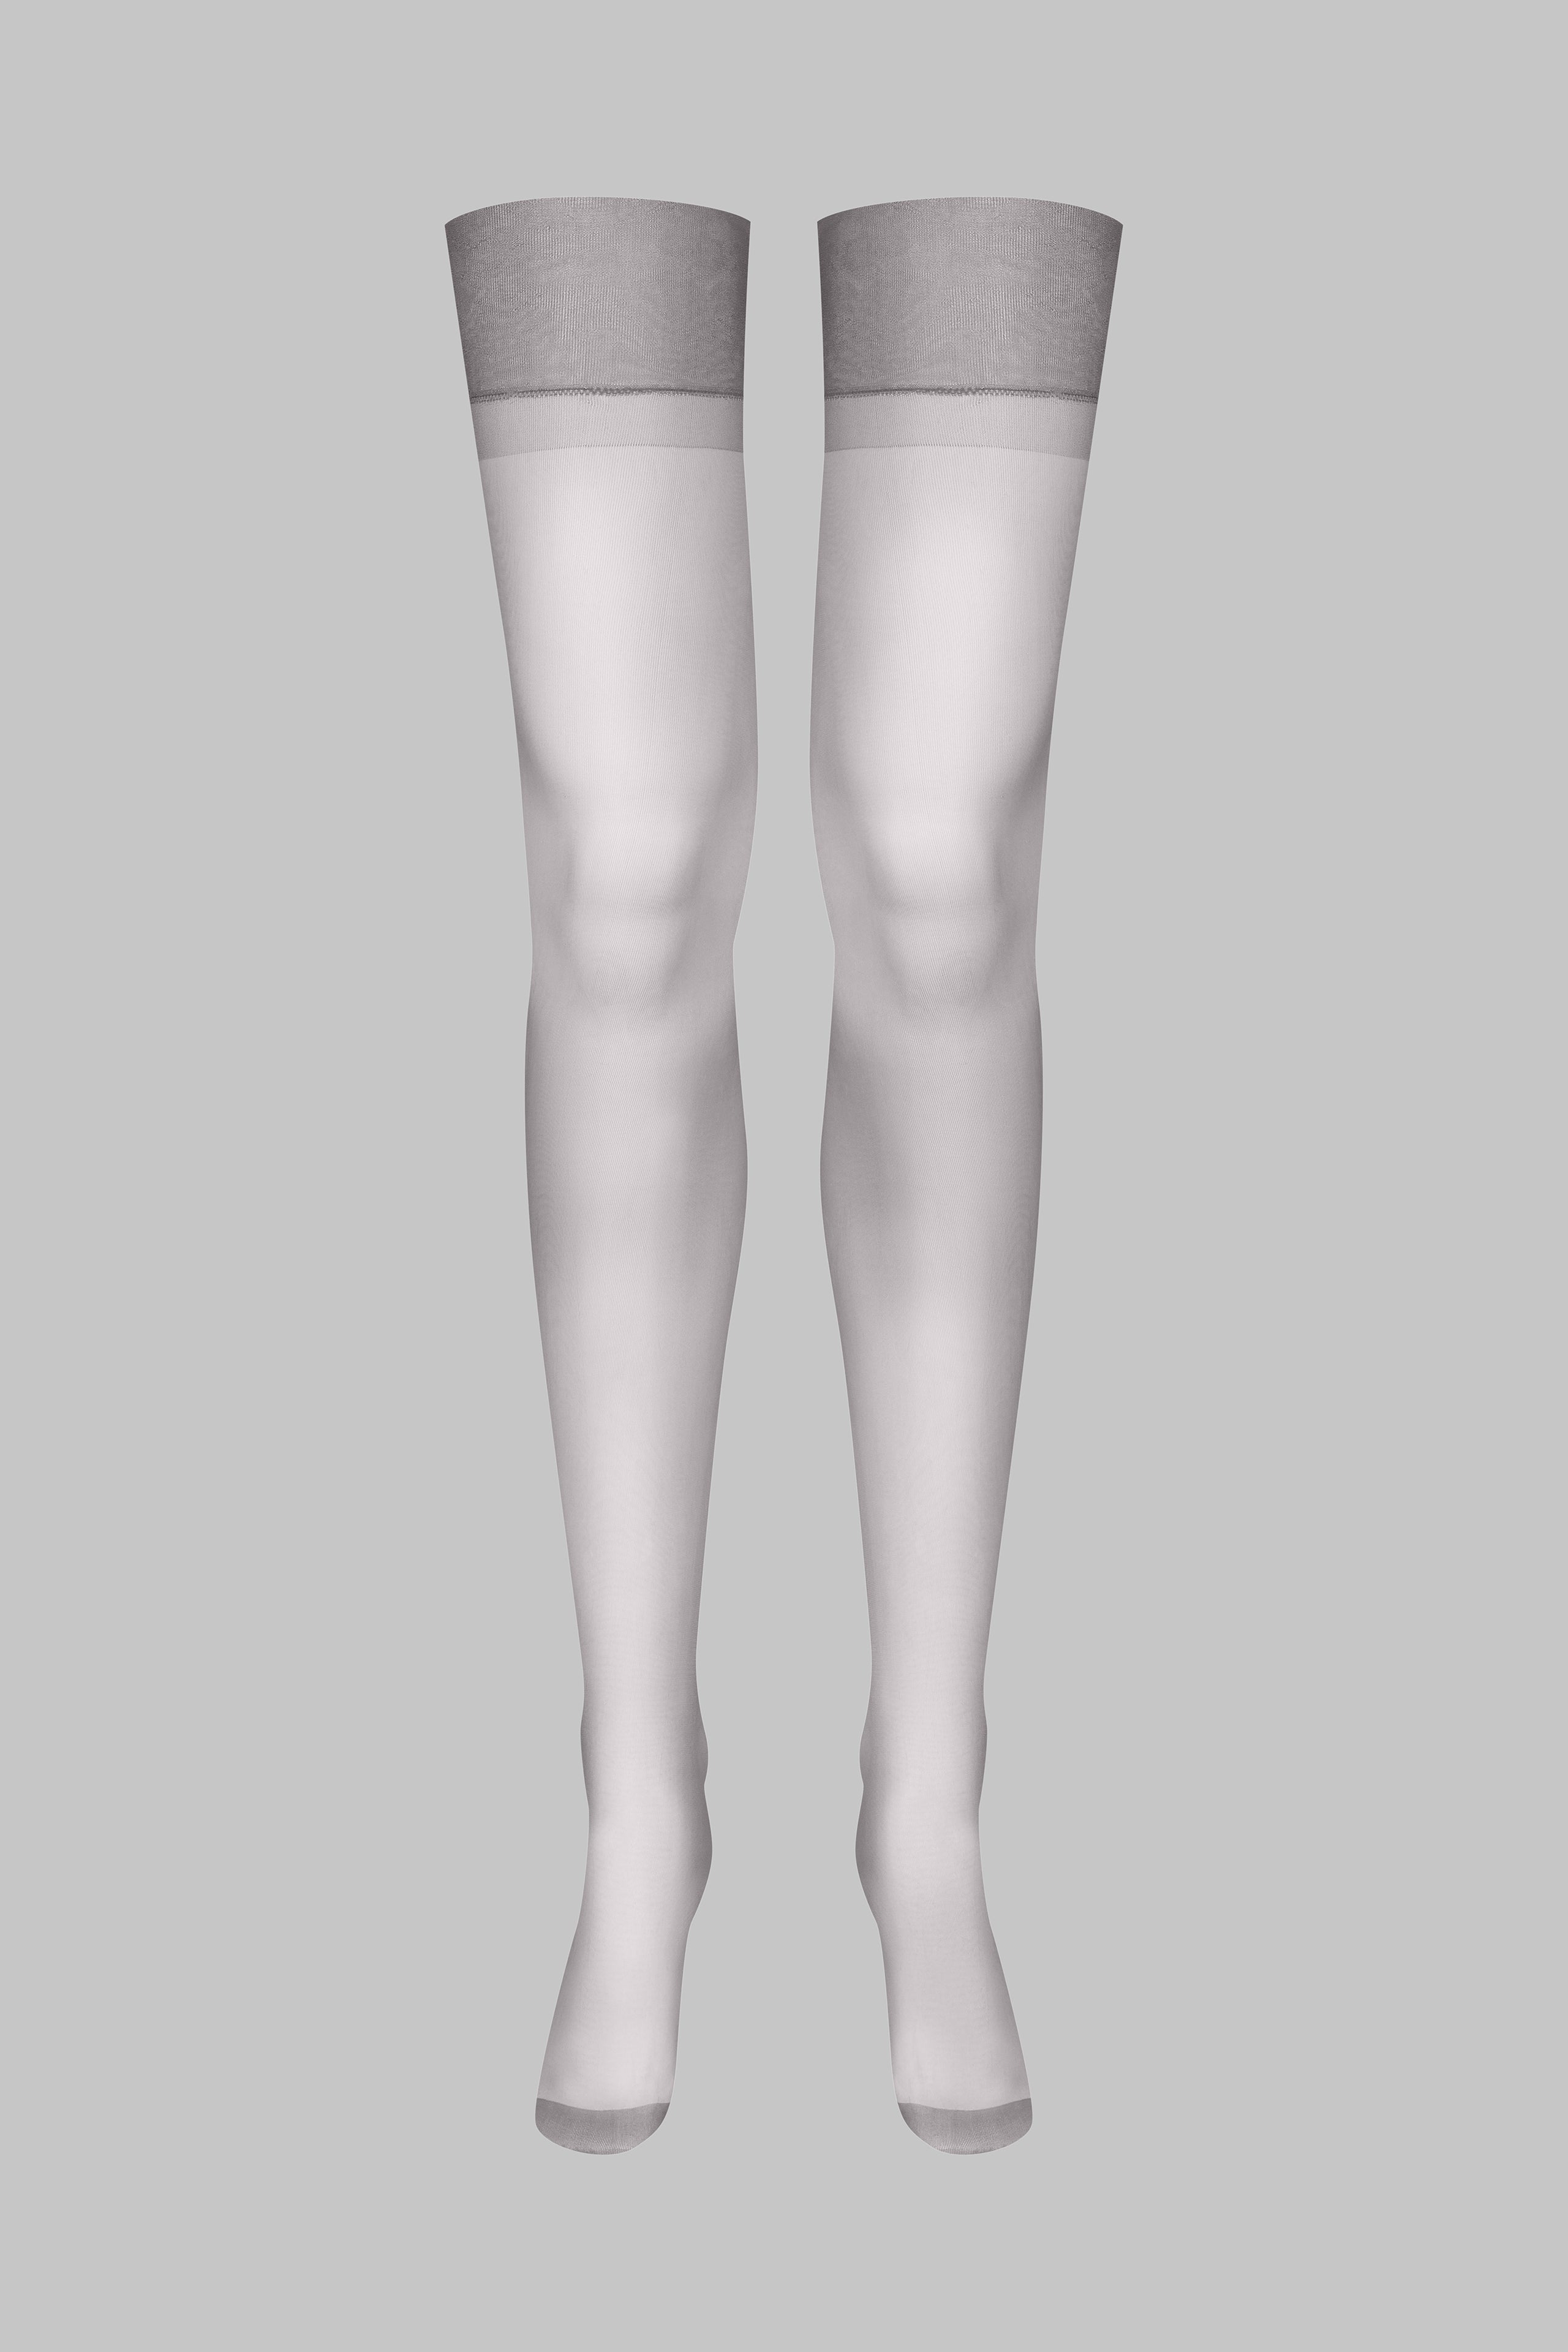 Nylon stockings - 15D - Grey